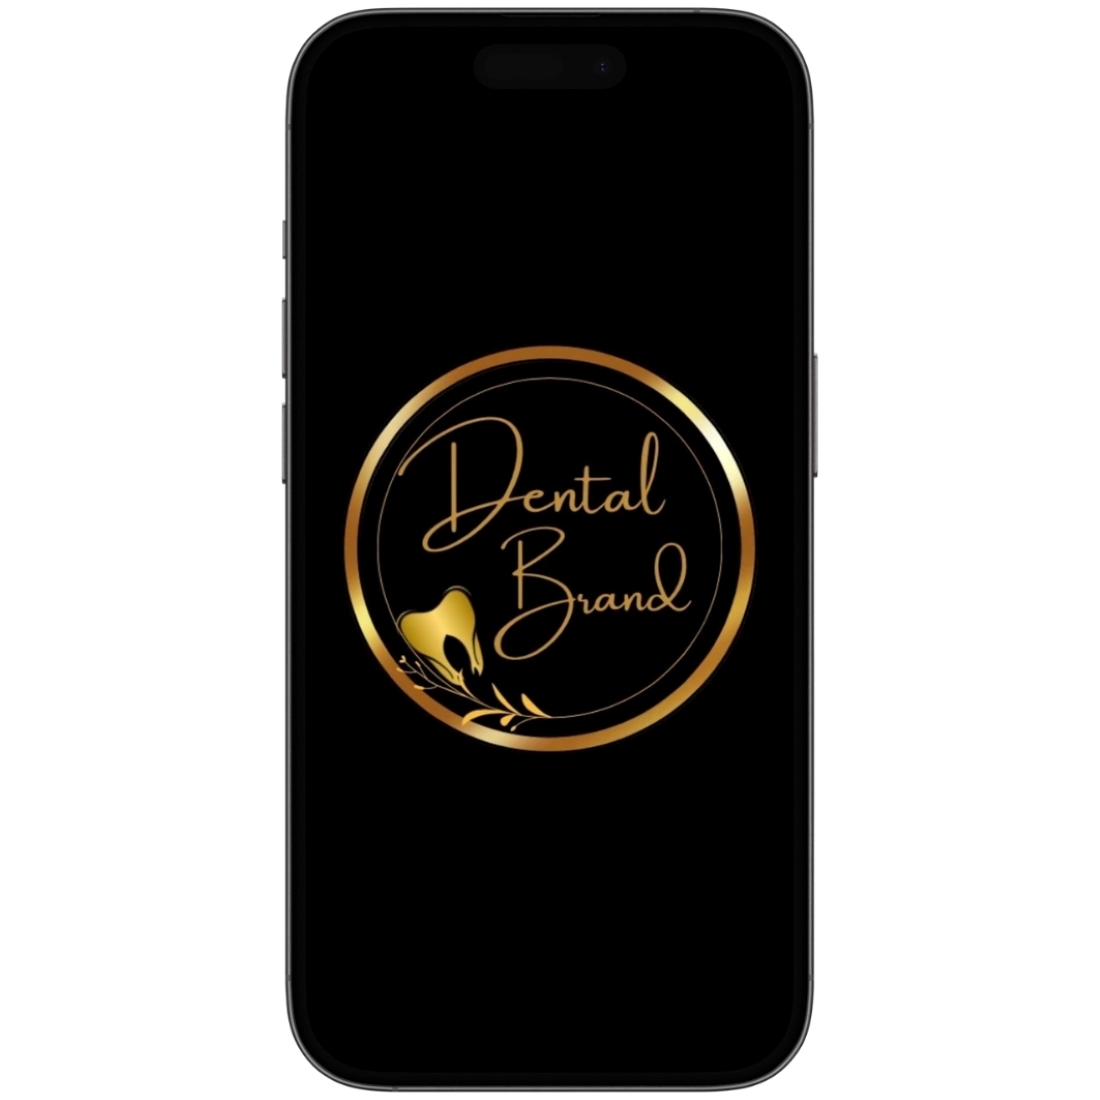 A Royal Gold Logo for DENTAL BRAND/DENTAL CLINIC cover image.